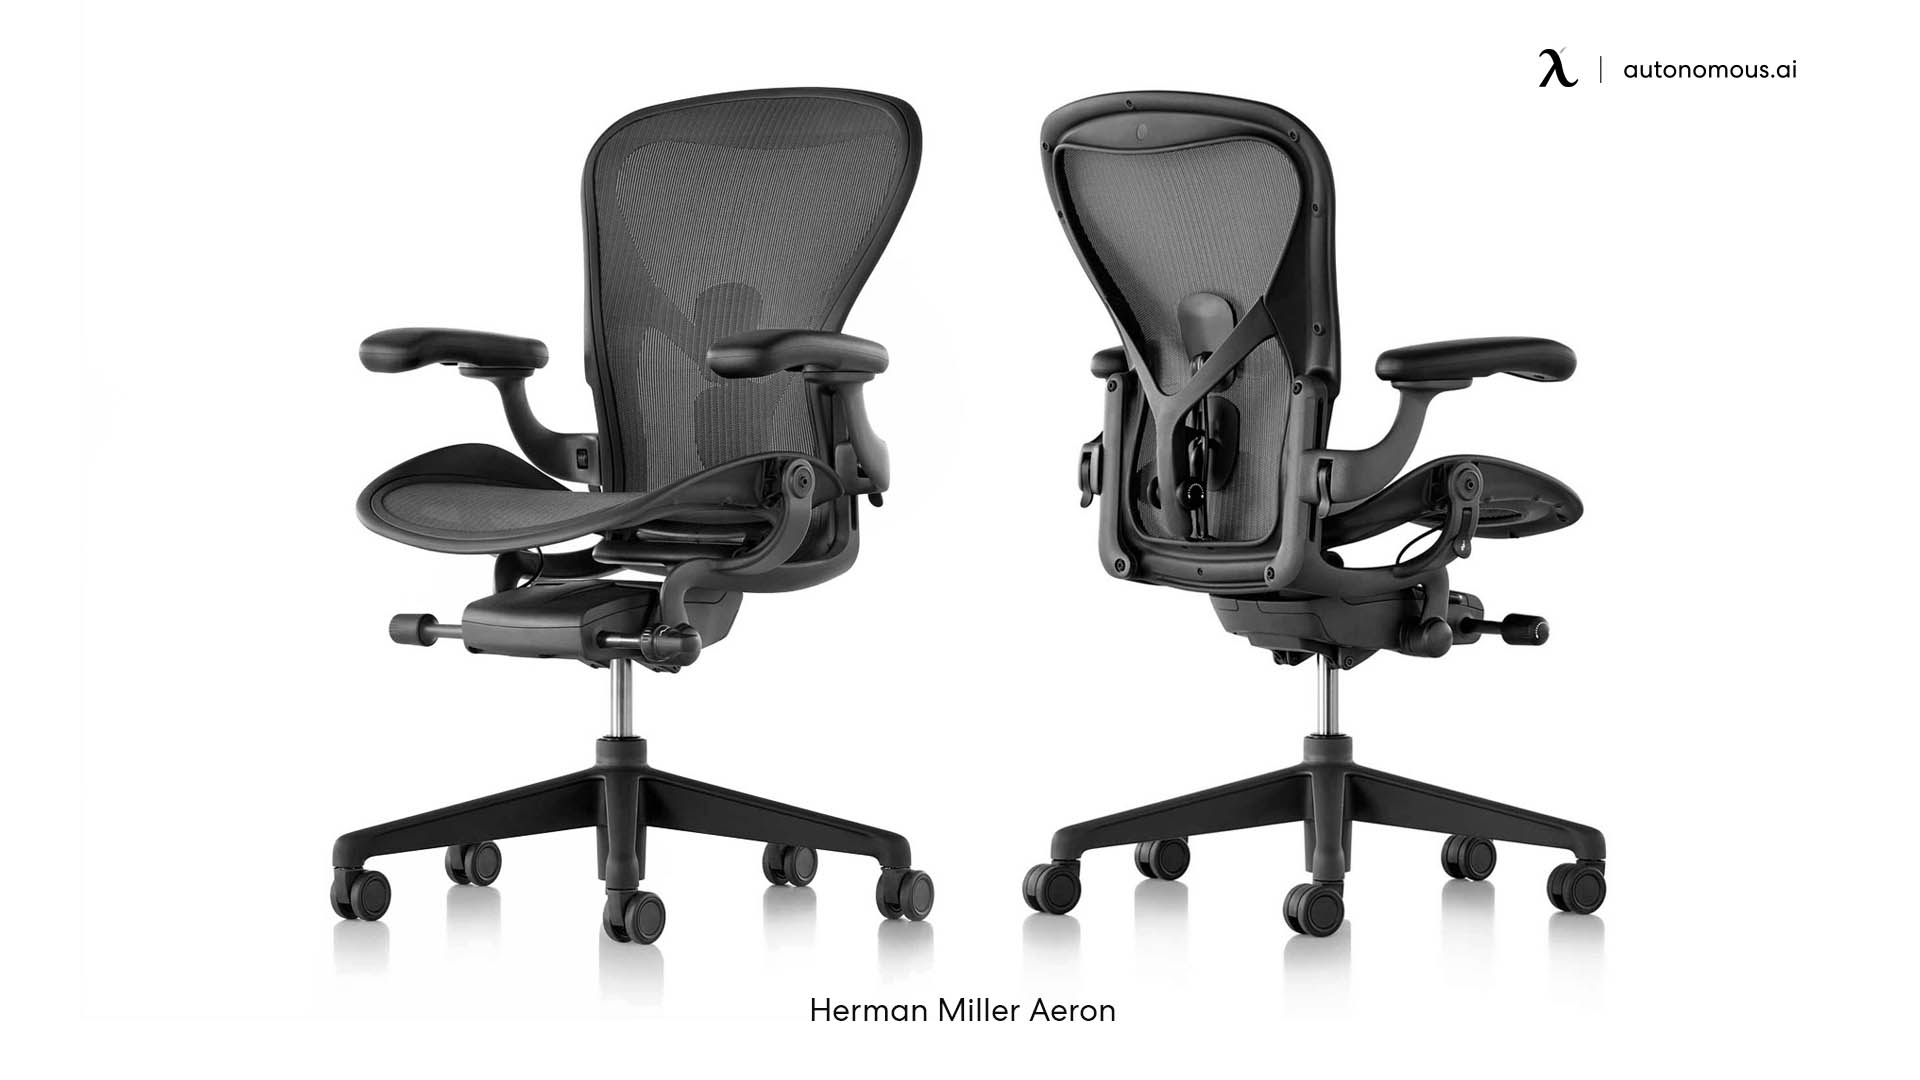 Aeron small desk chair